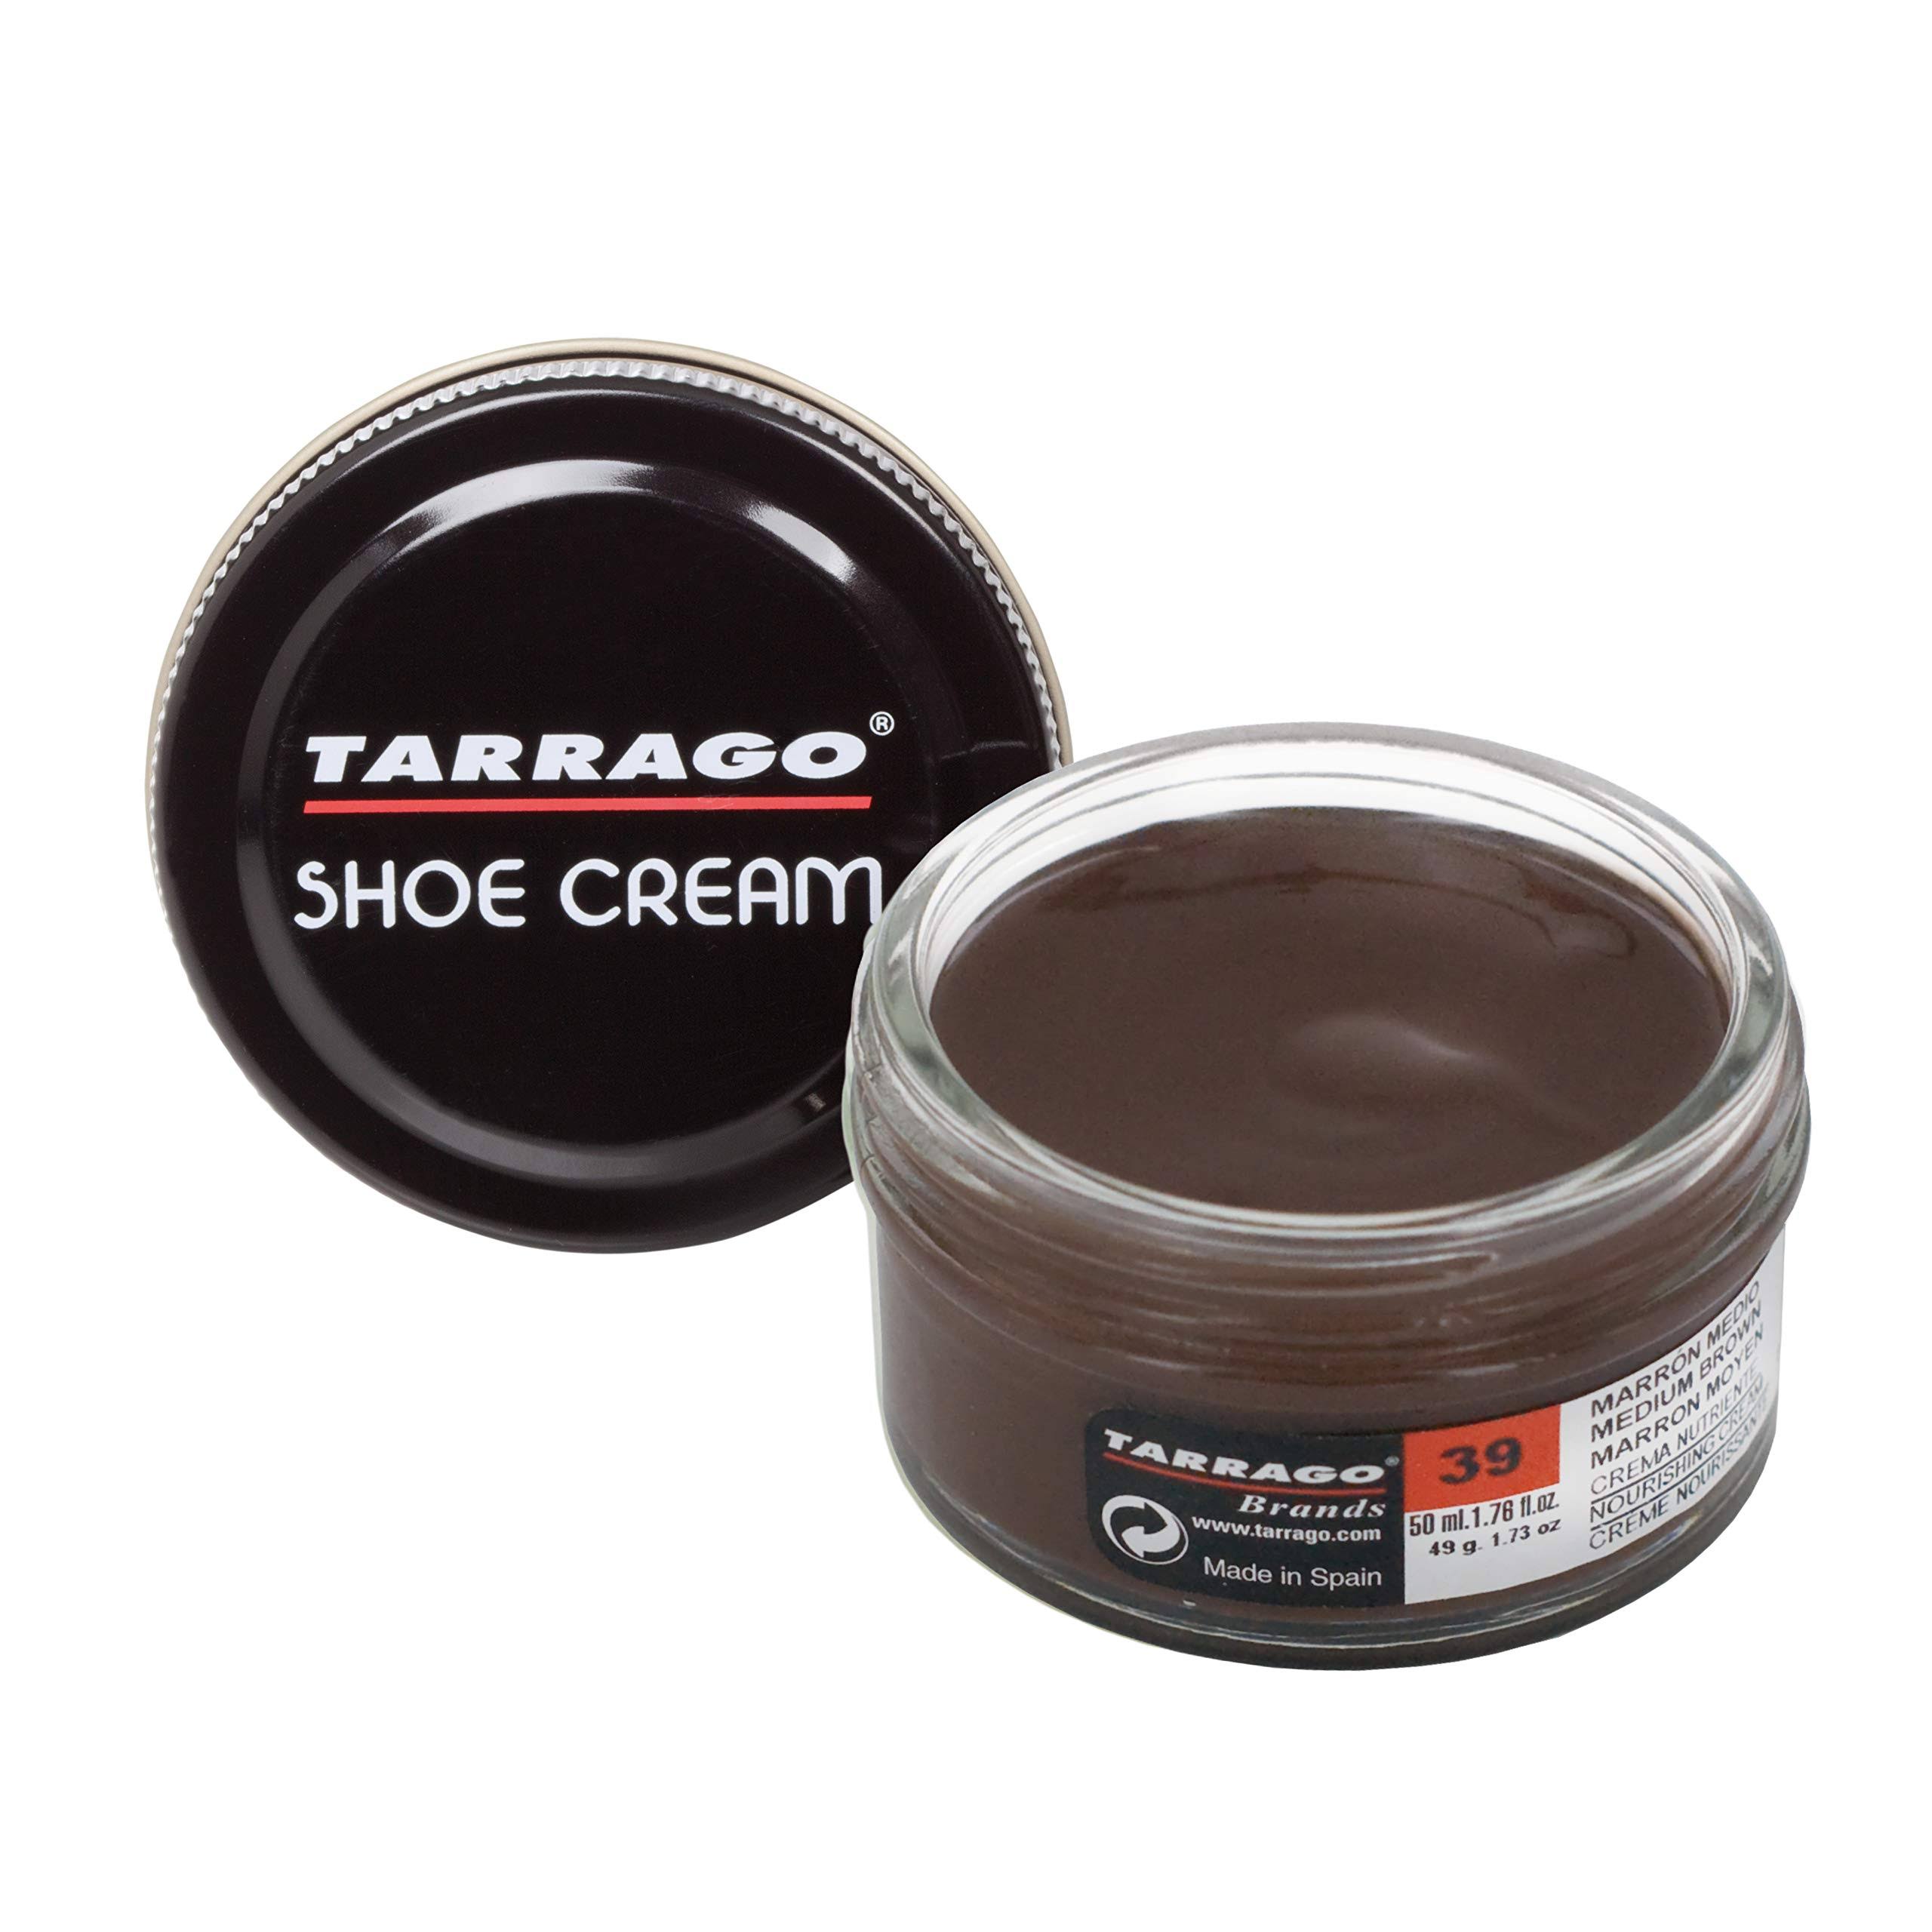 Tarrago Shoe Cream - Medium Brown, 50ml